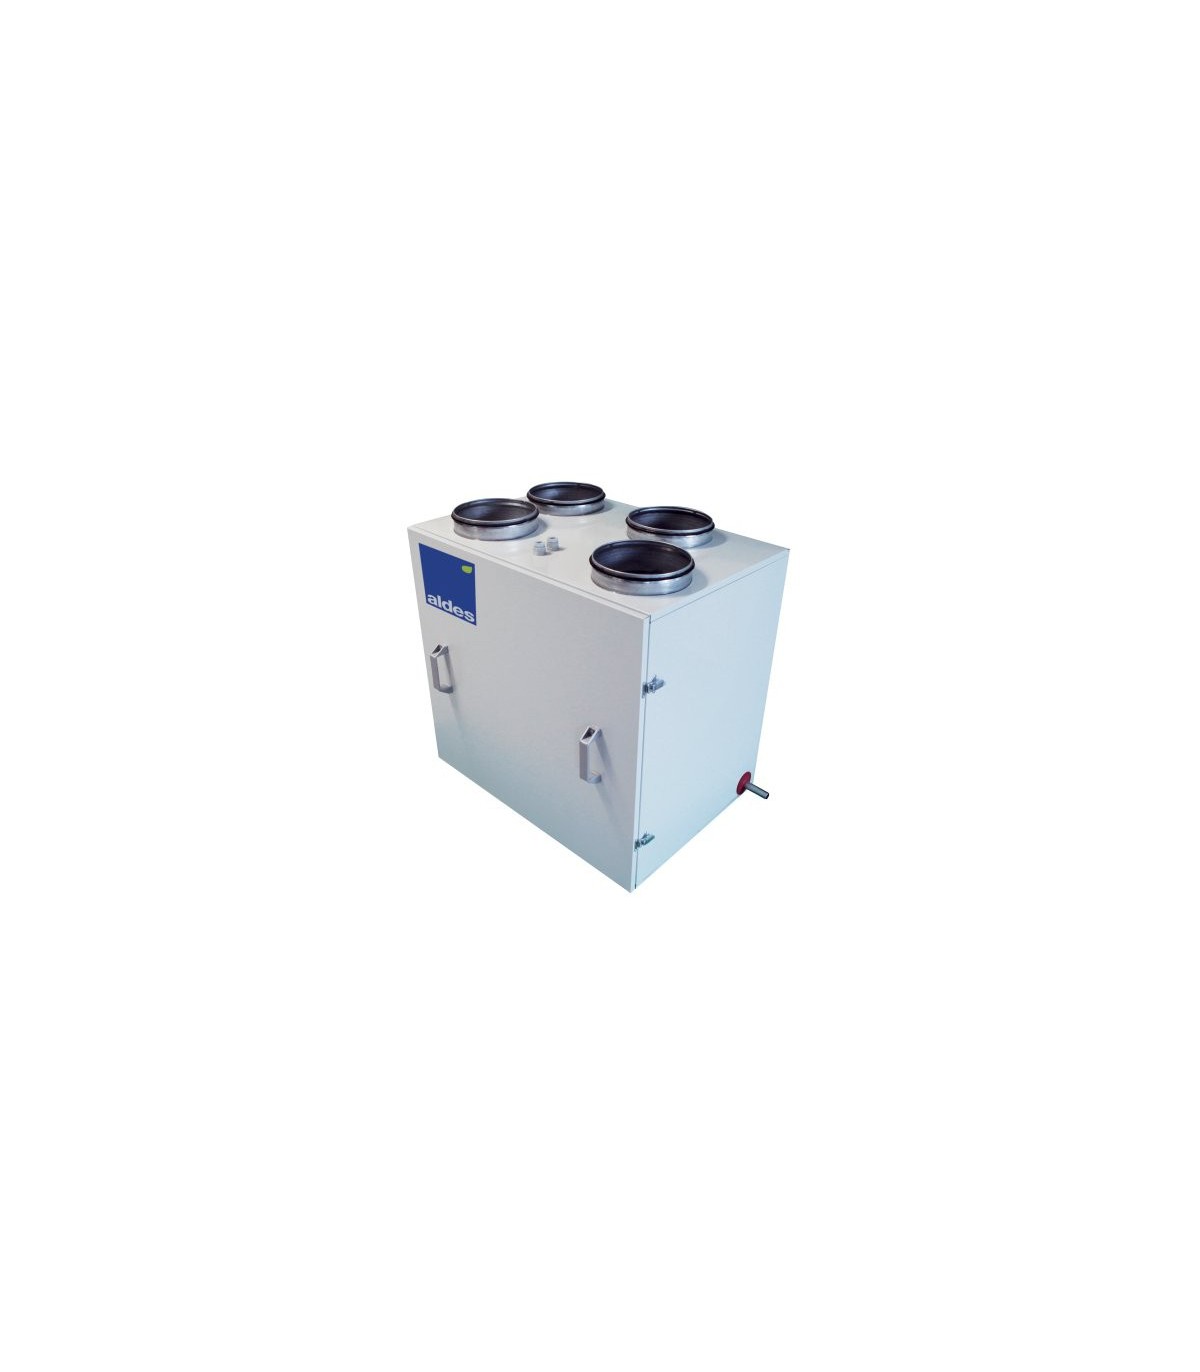 Filtre ventilation tertiaire G4 DFE + 450 - Aldes Storeonline